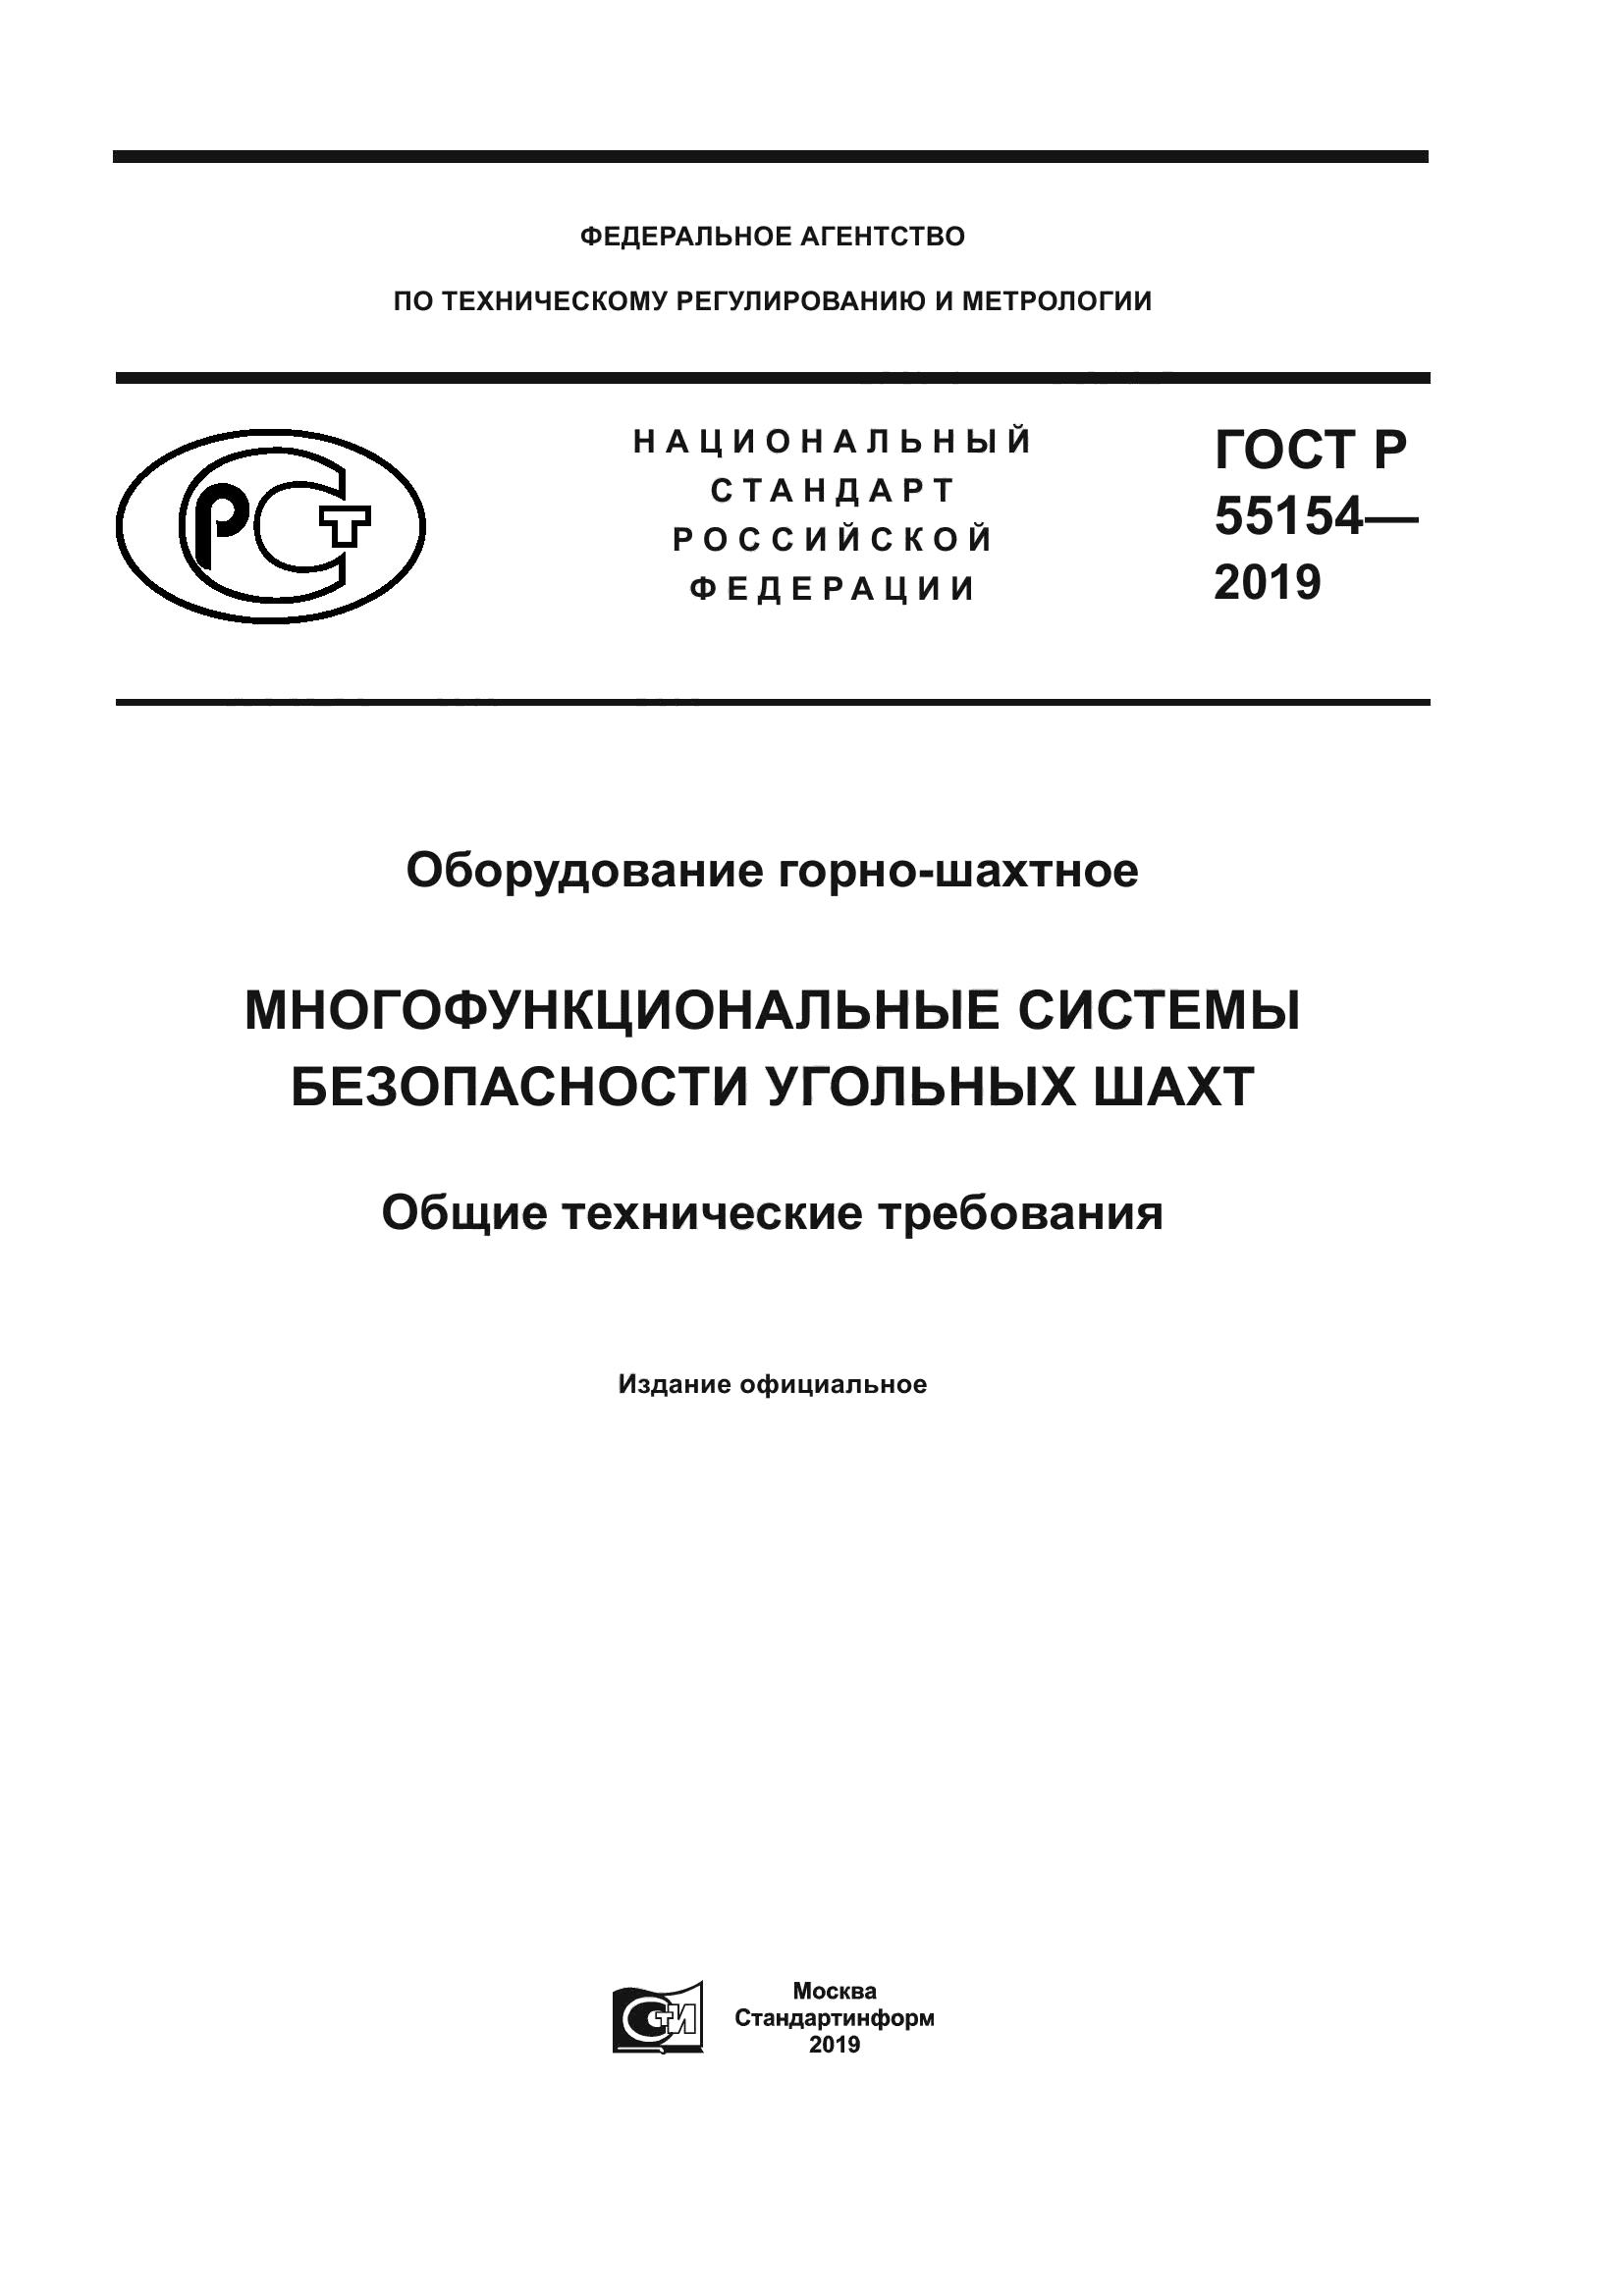 ГОСТ Р 55154-2019